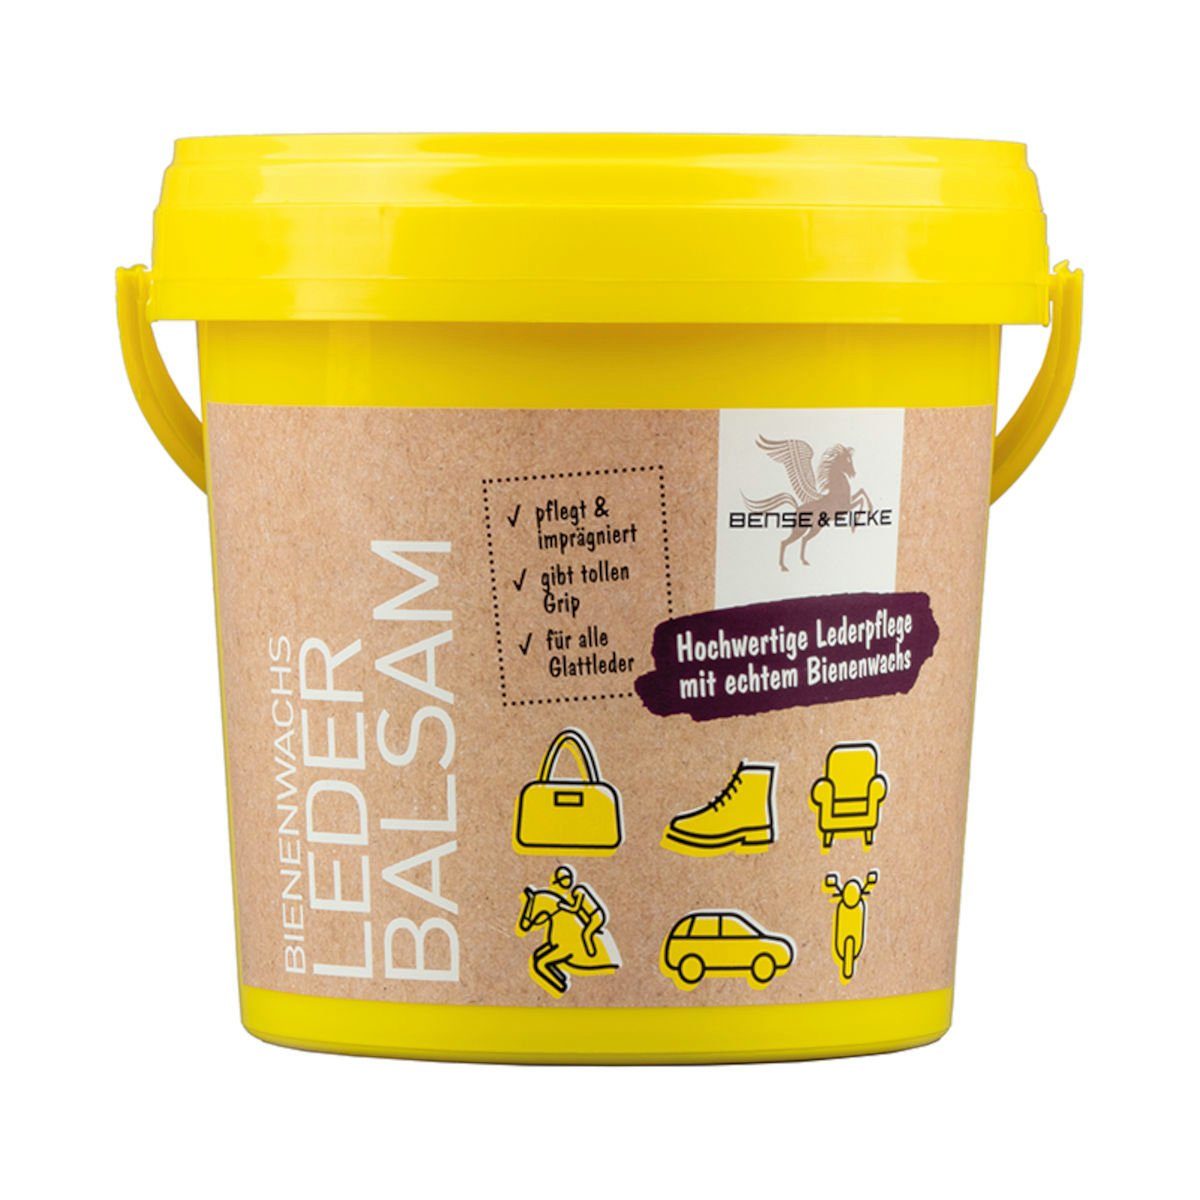 Bense & Eicke Bienenwachs-Lederpflege-Balsam - 1000 ml Lederbalsam (Packung)